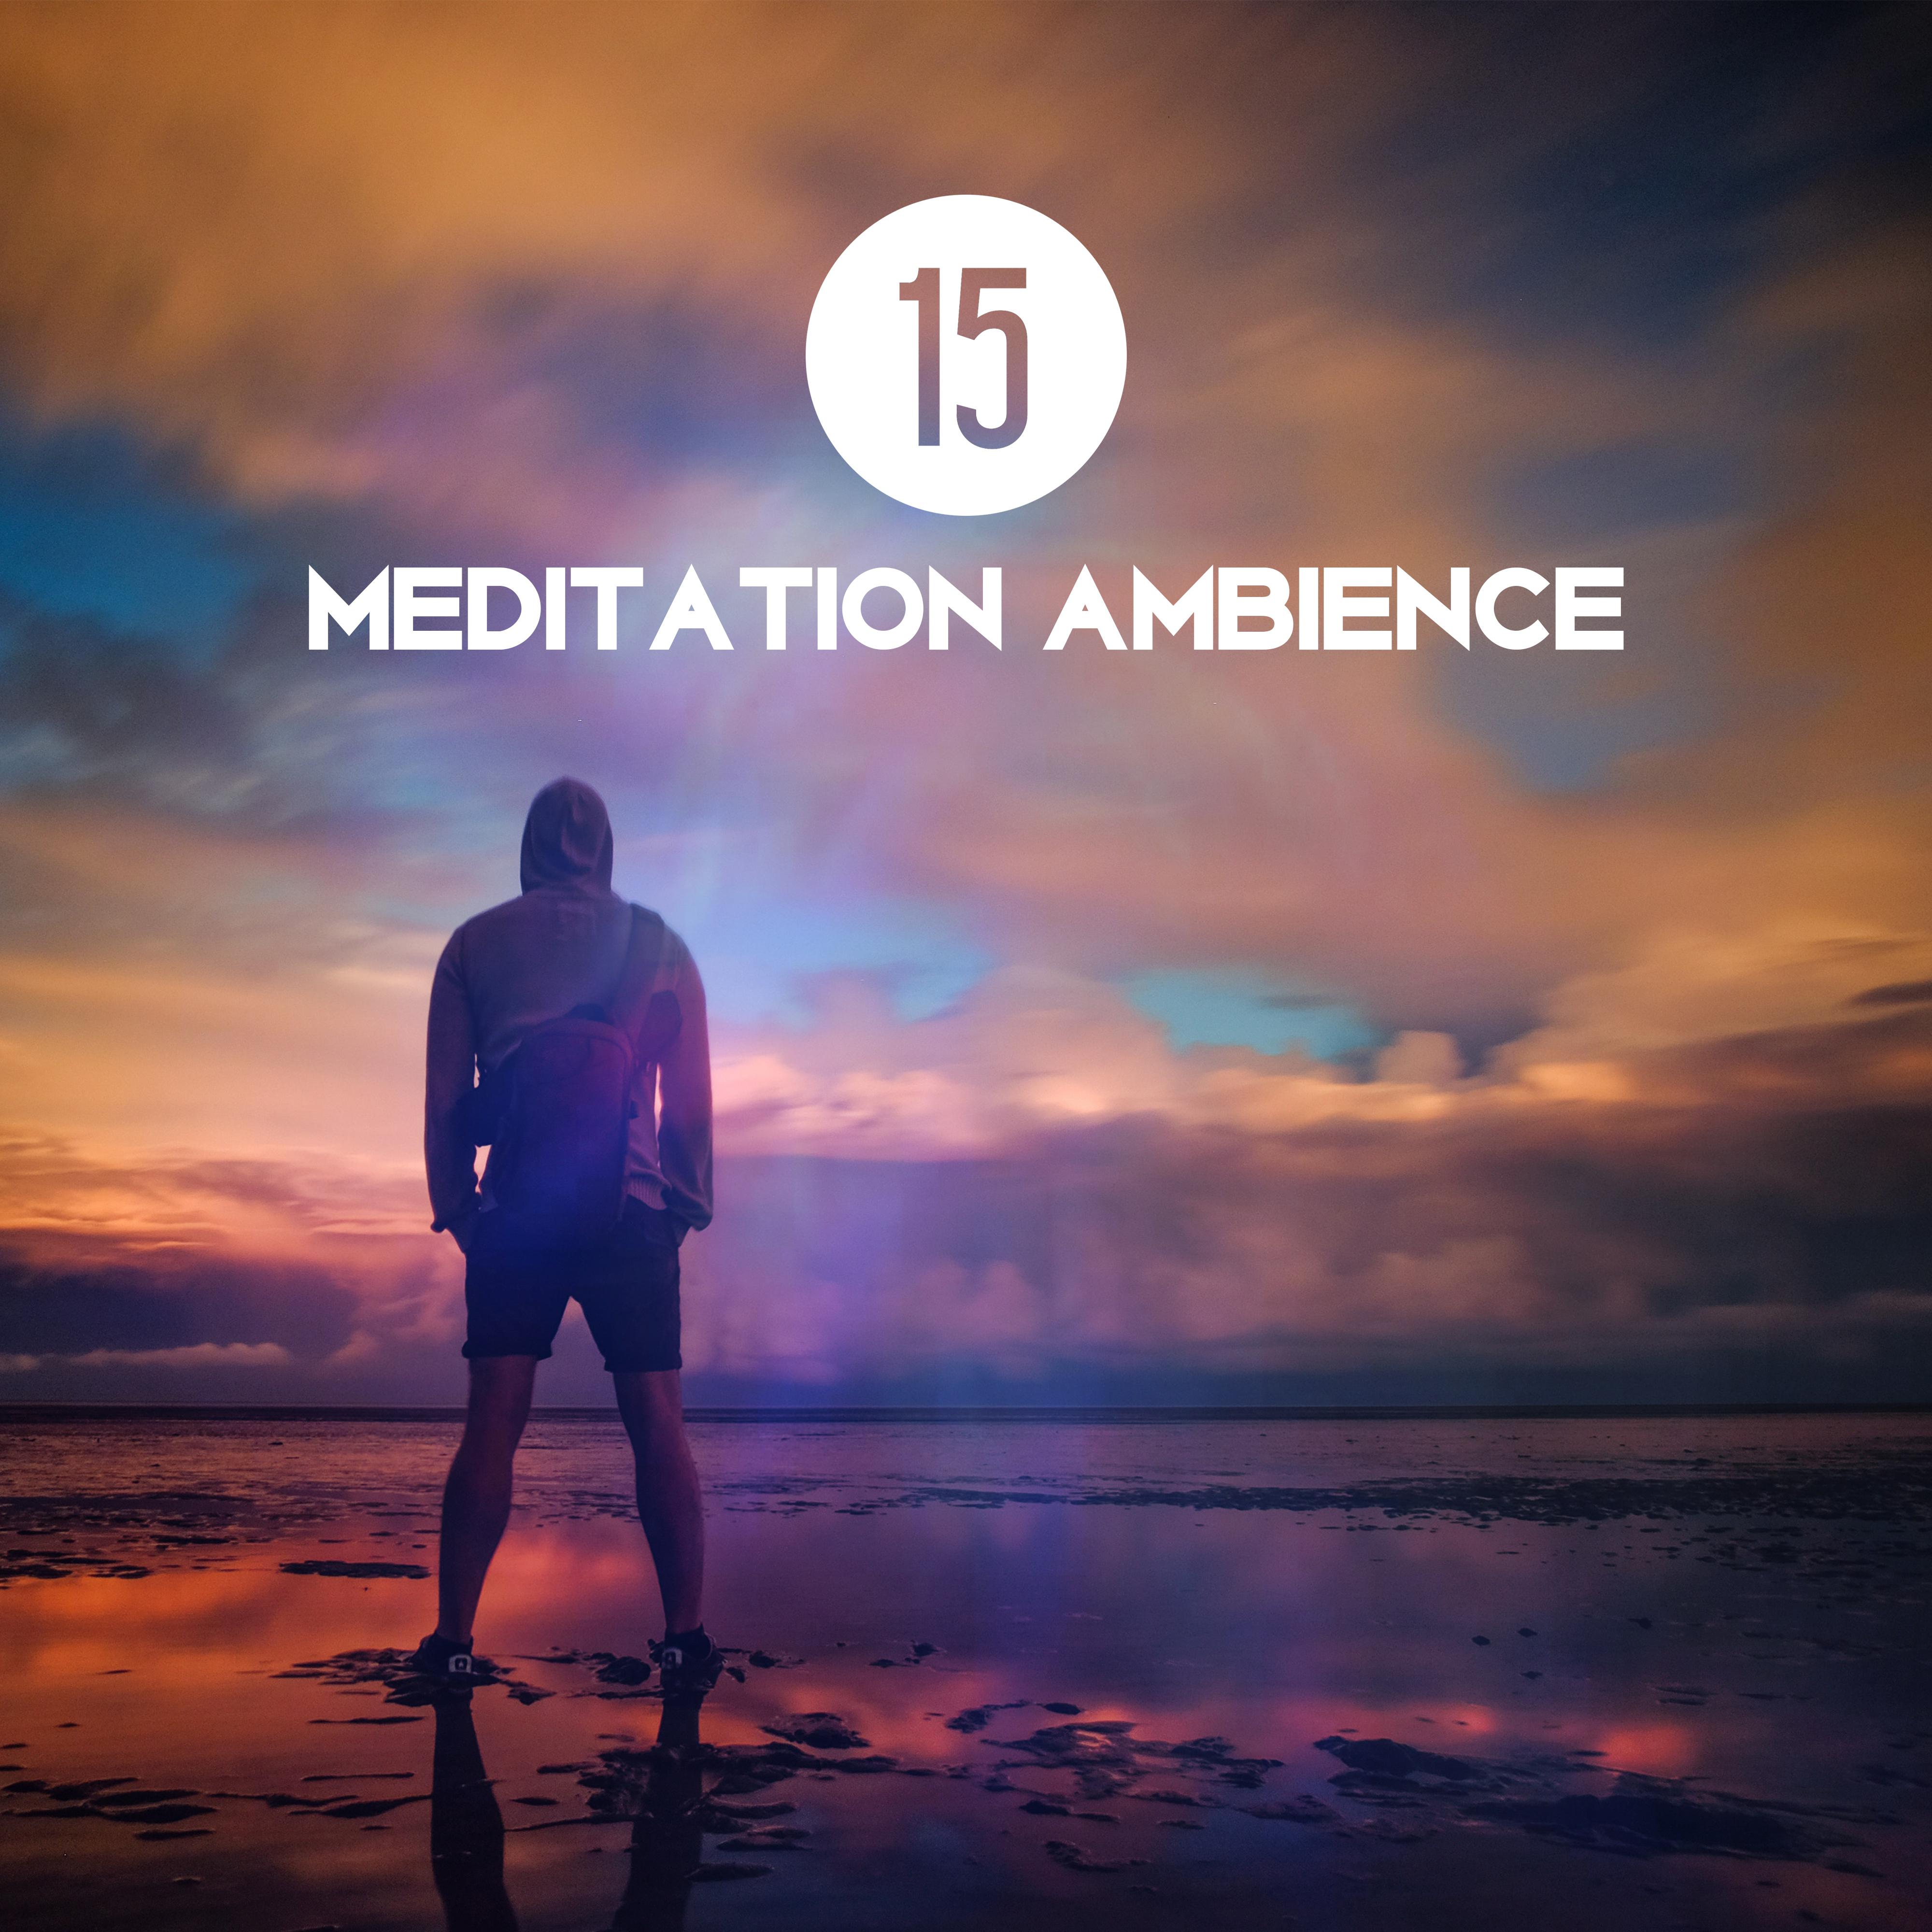 15 Meditation Ambience – New Asian Spirit, Meditation, Yoga Music, Zen, Kundalini, Hatha Yoga